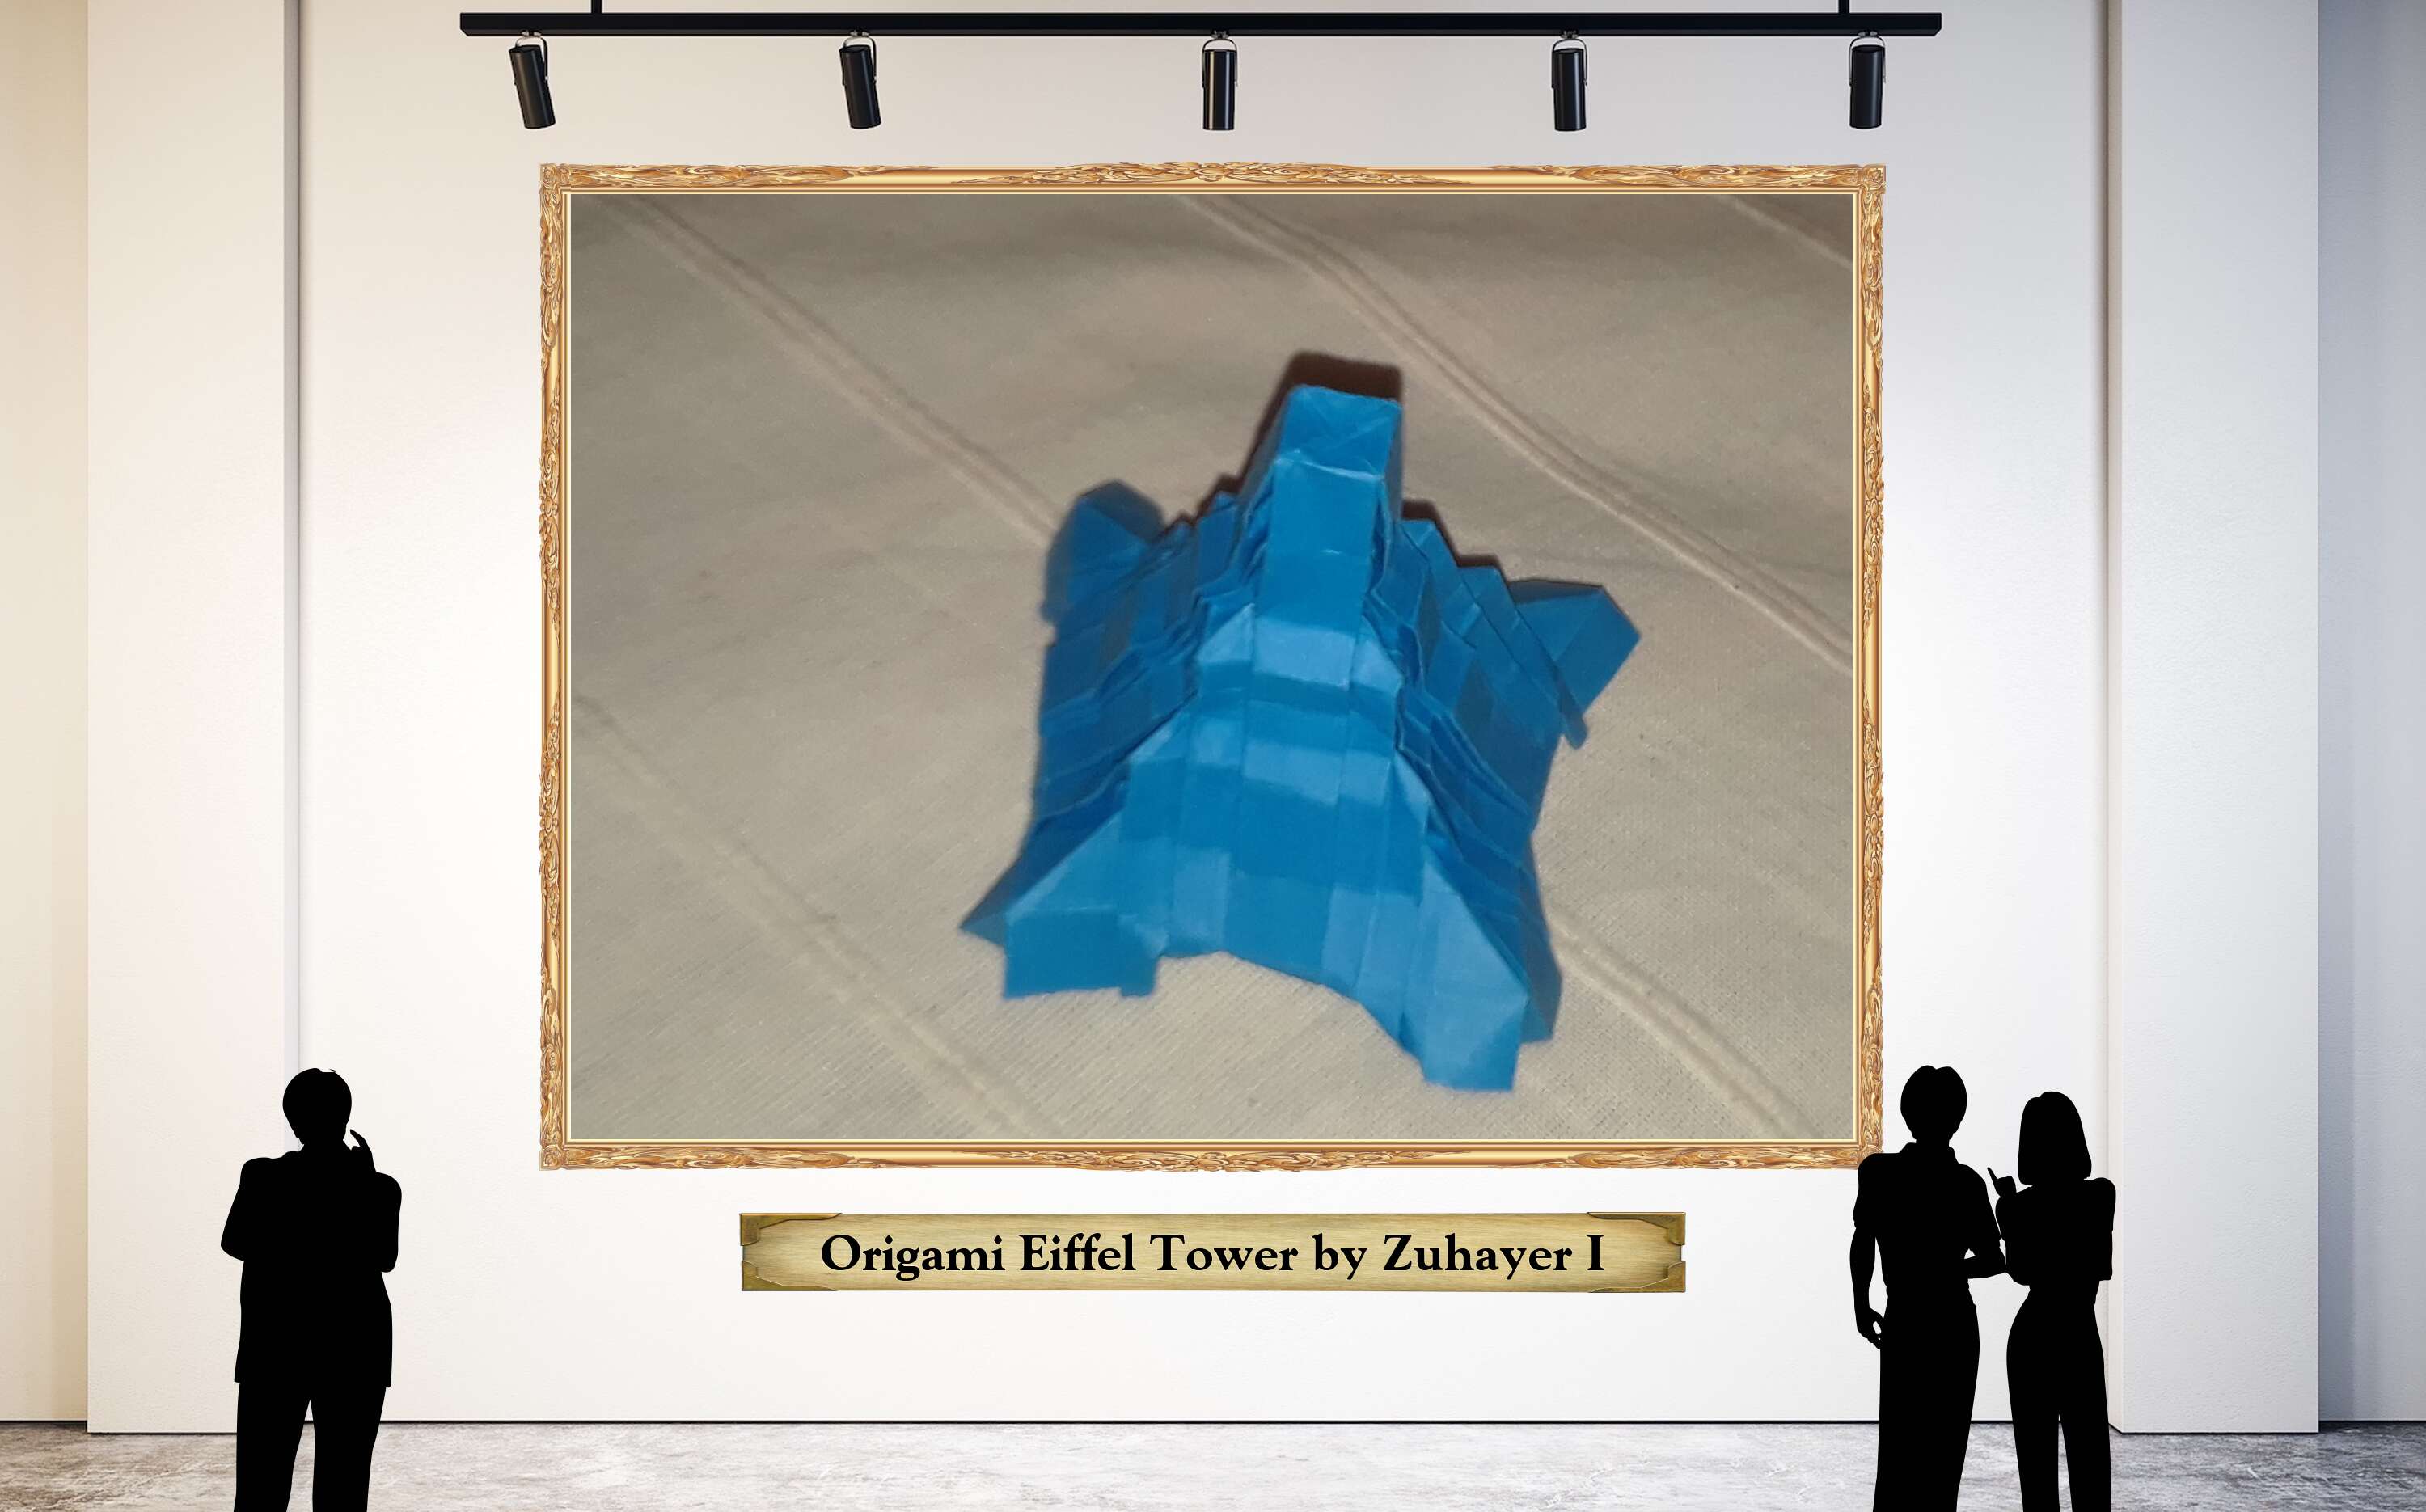 Origami Eiffel Tower by Zuhayer I